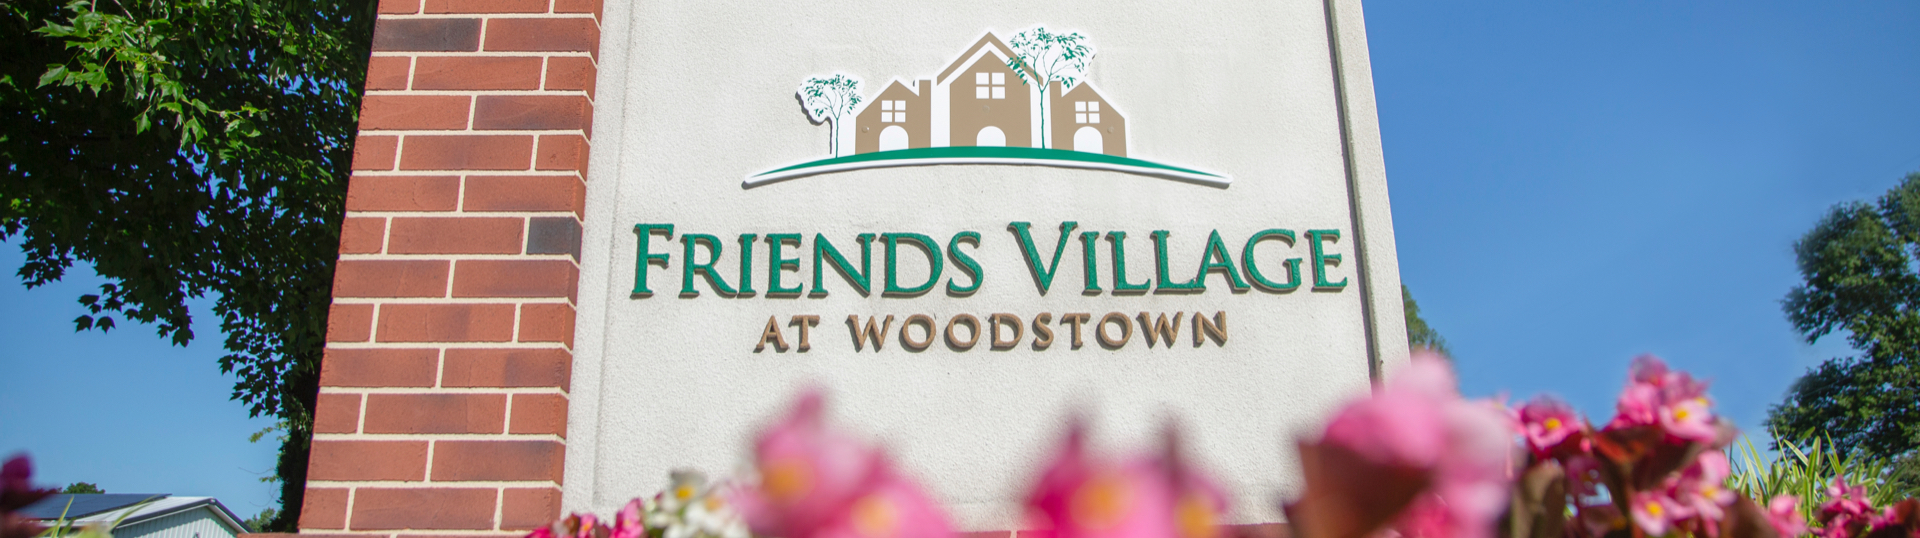 Friends Village at Woodstown entrance sign